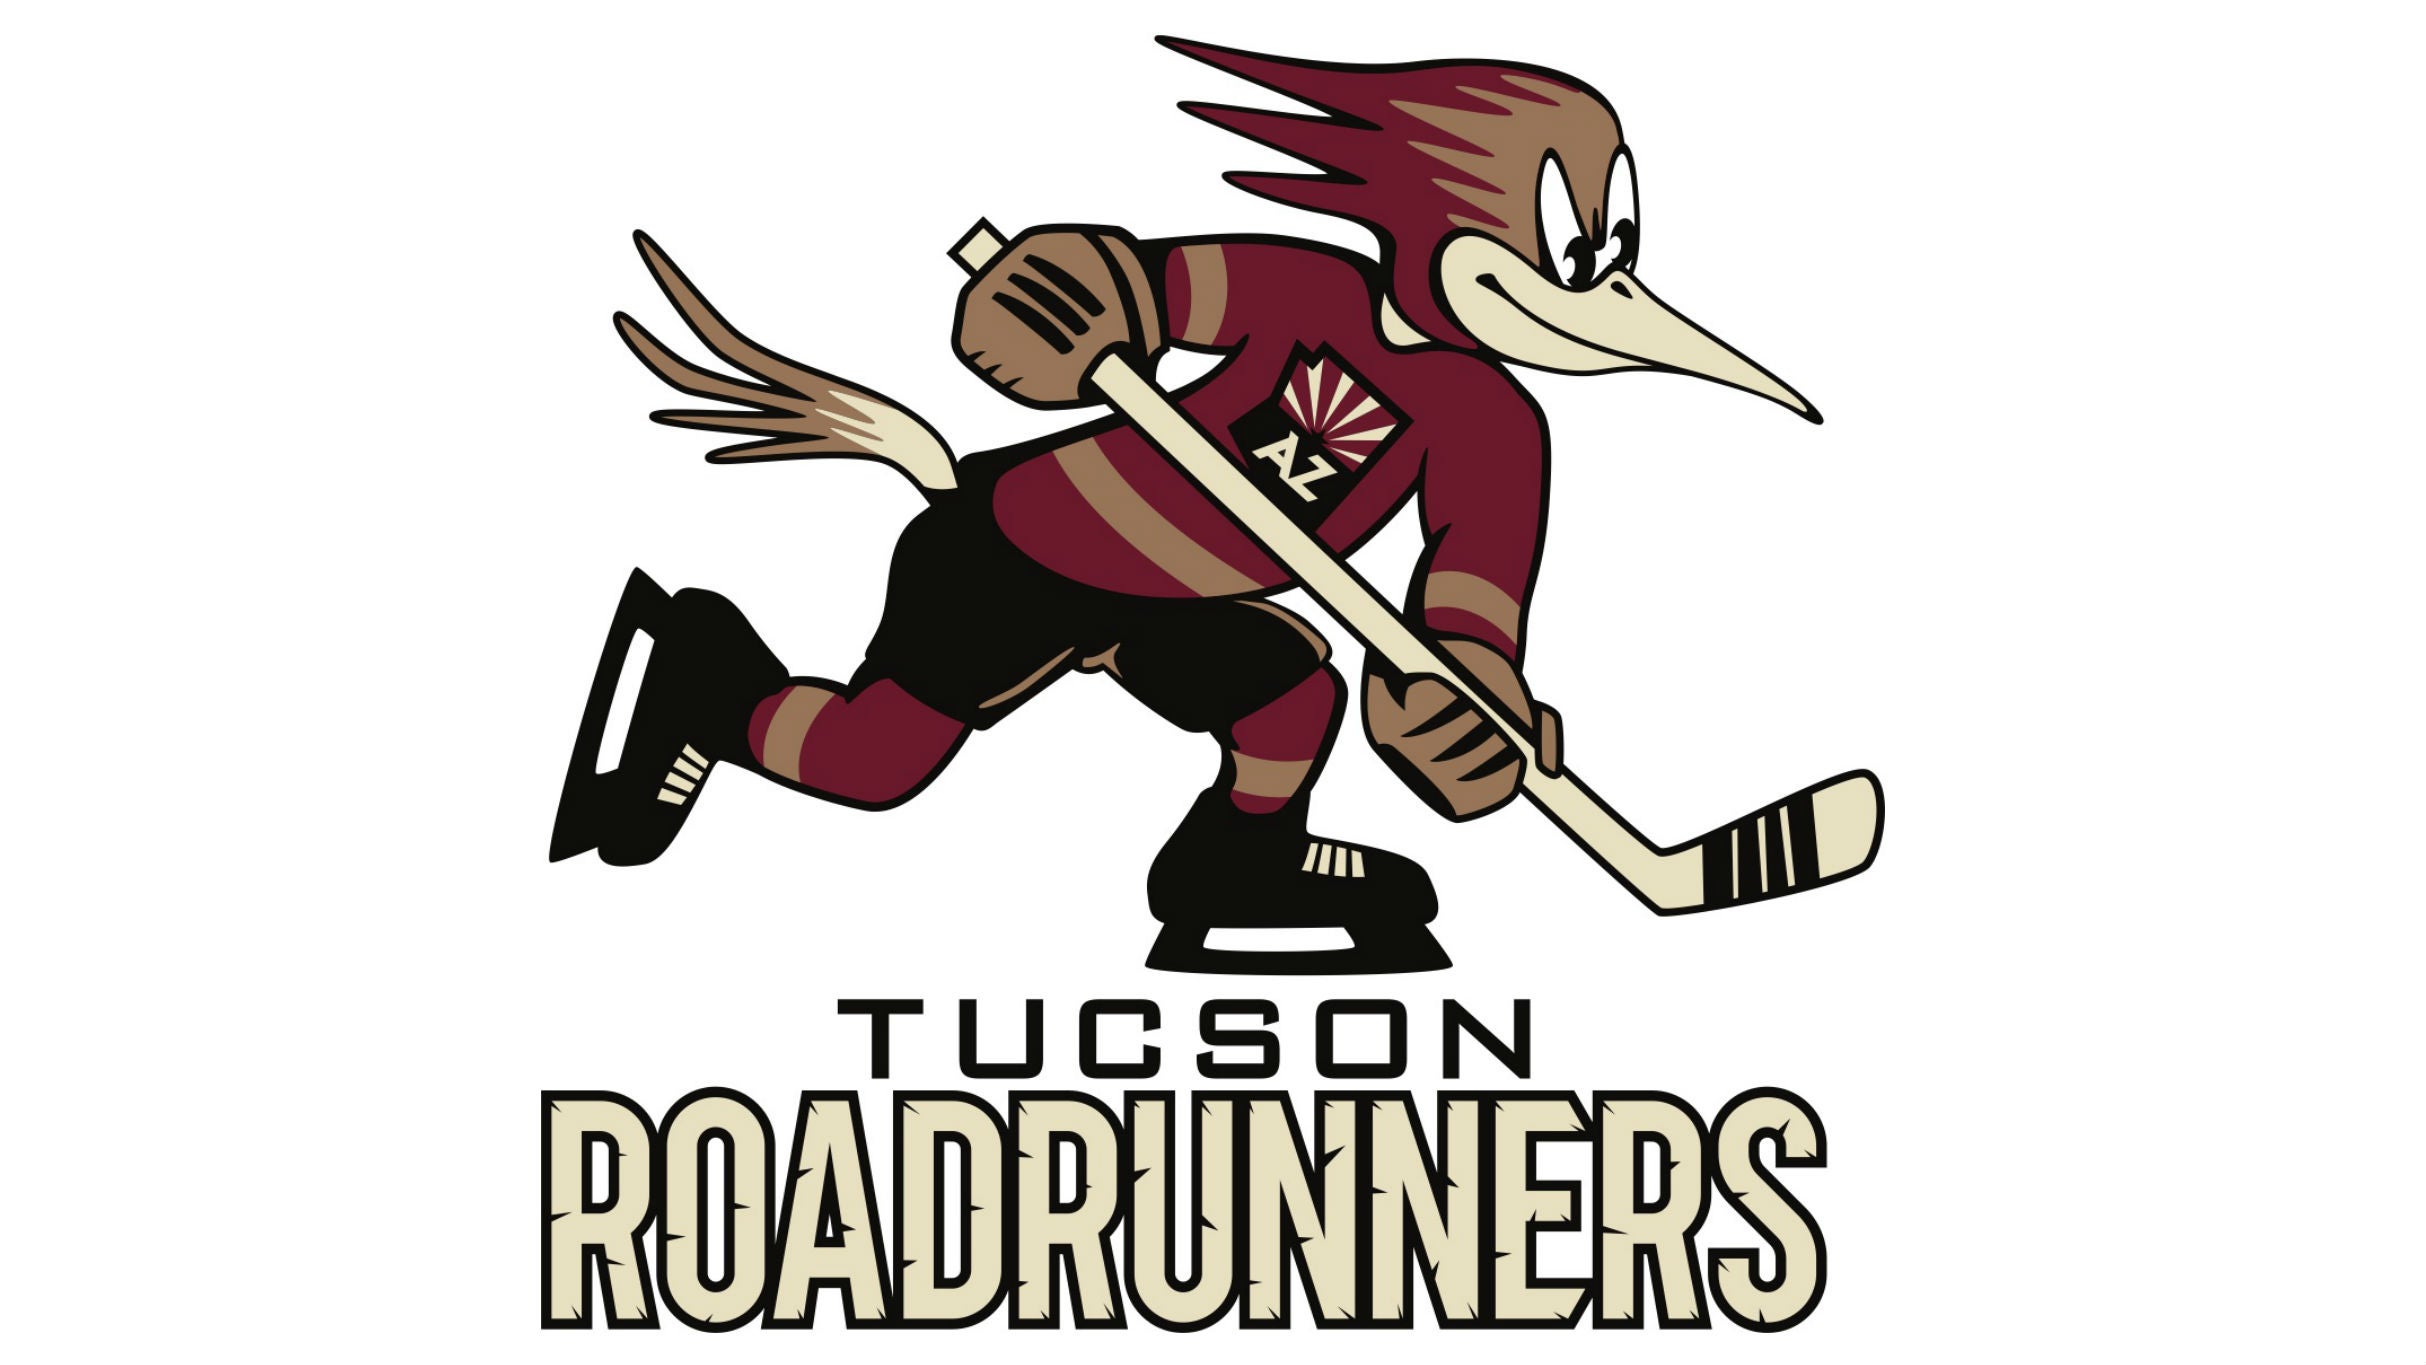 Tucson Roadrunners Game 2 at Tucson Arena